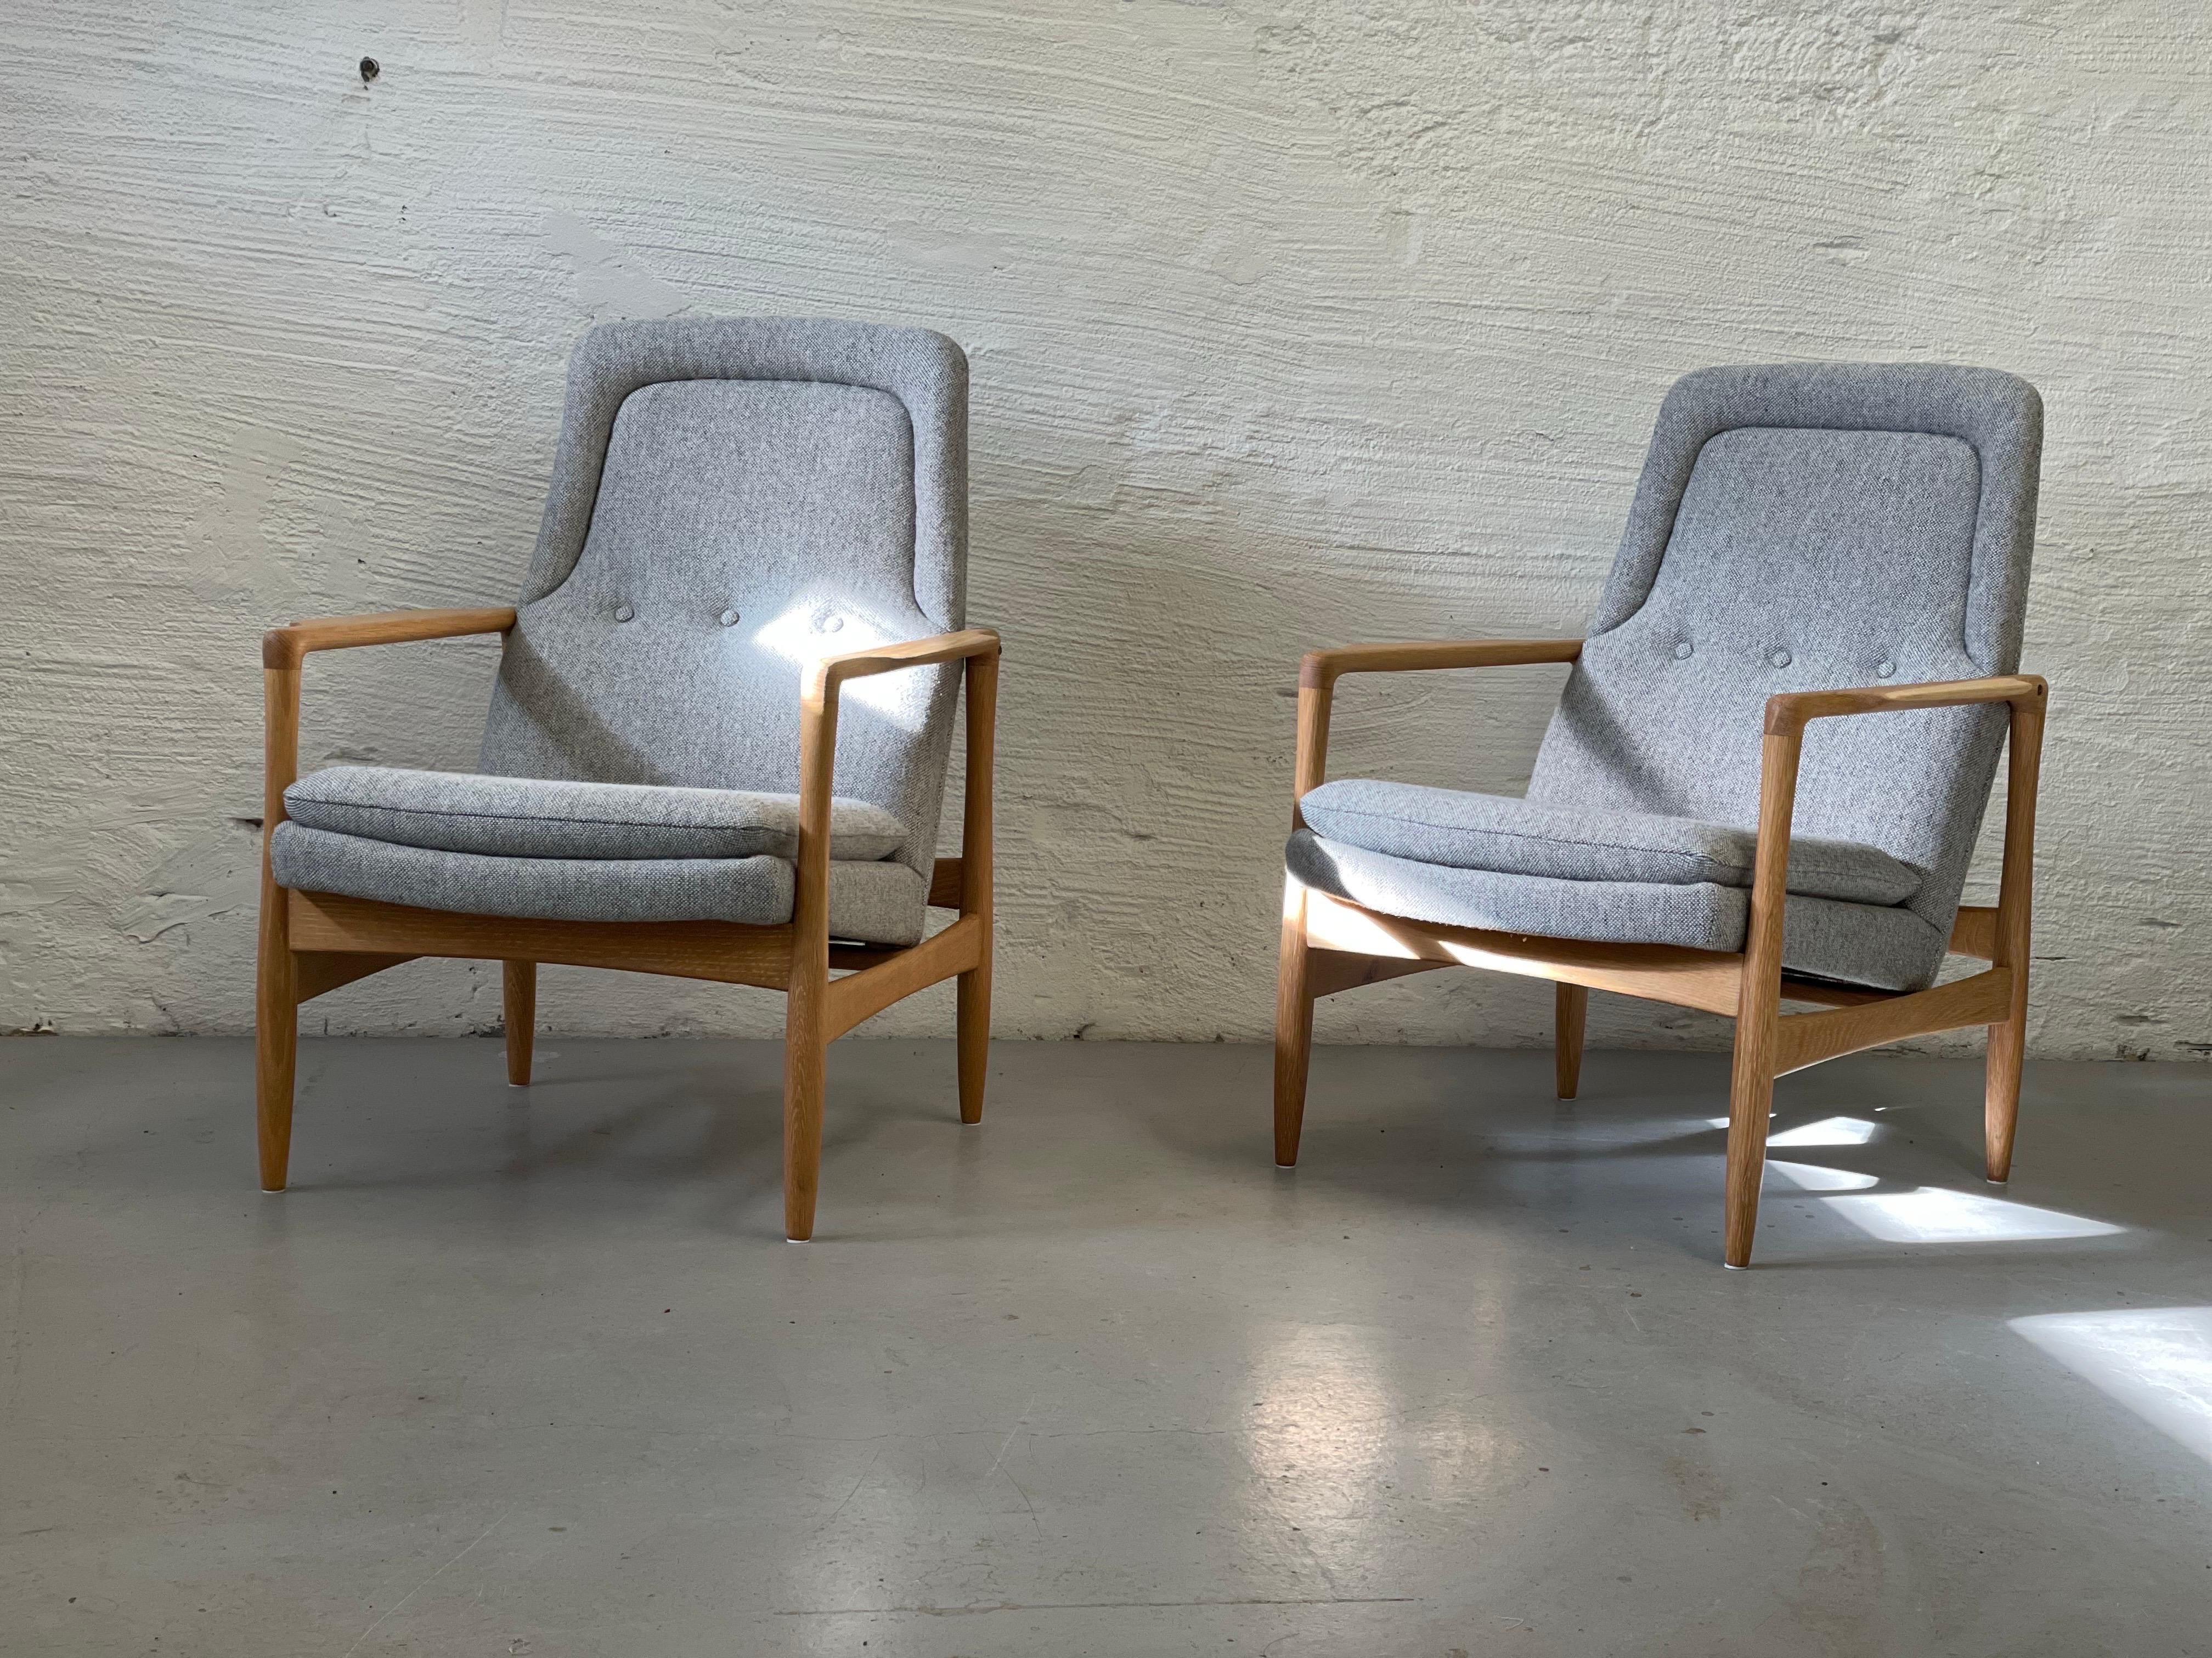 Norwegian Midcentury - Modern chairs, Torbjørn Afdal, 1957 For Sale 3